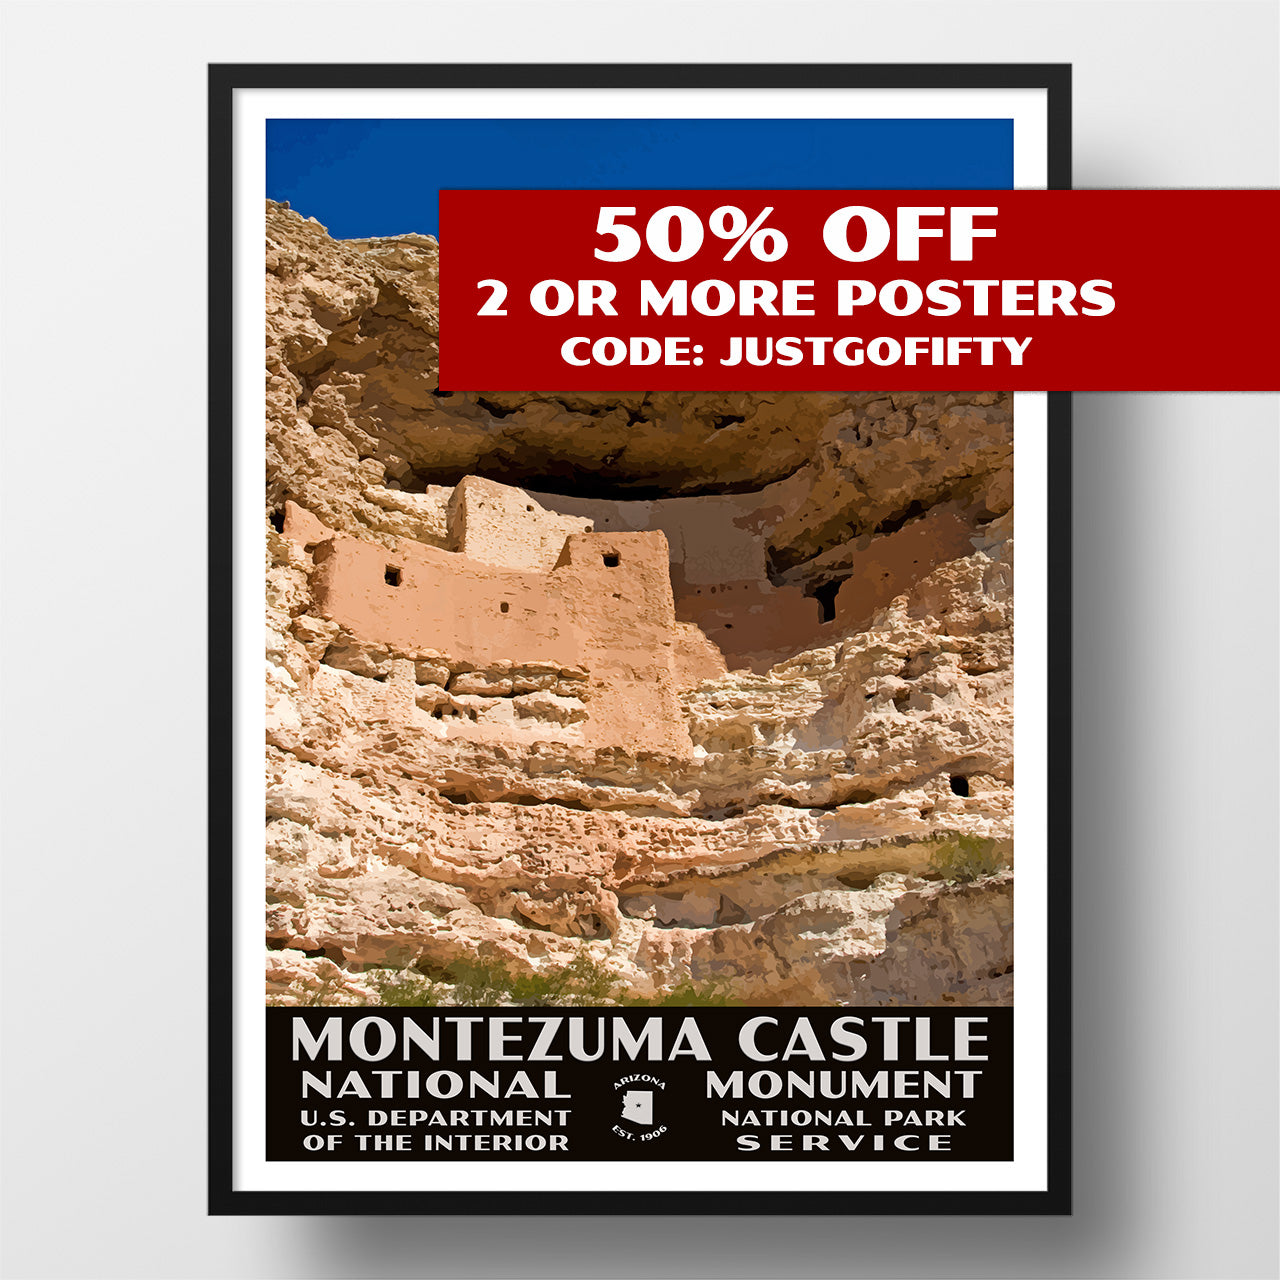 Montezuma Castle National Monument poster